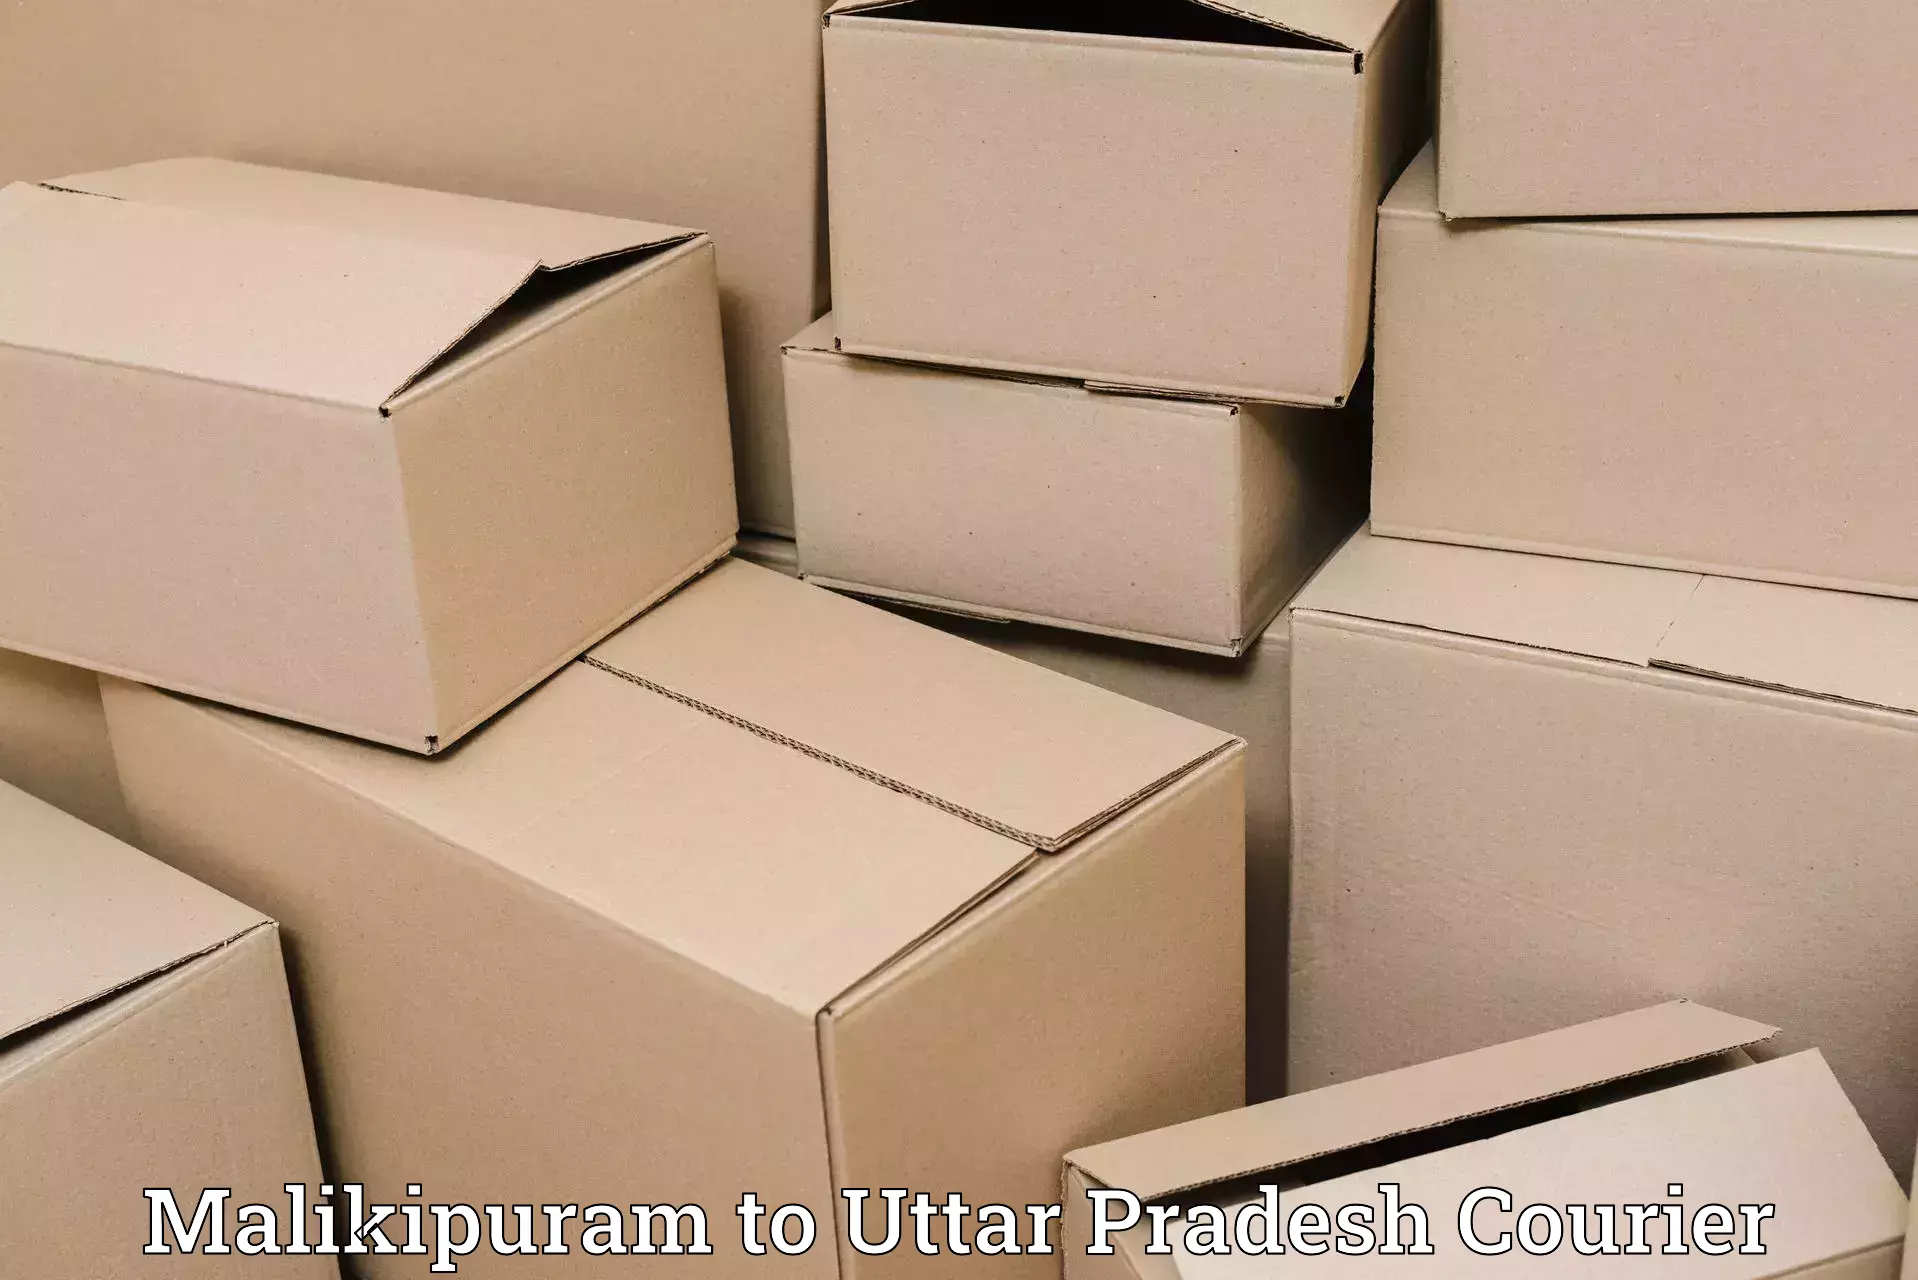 Nationwide parcel services Malikipuram to Baghpat